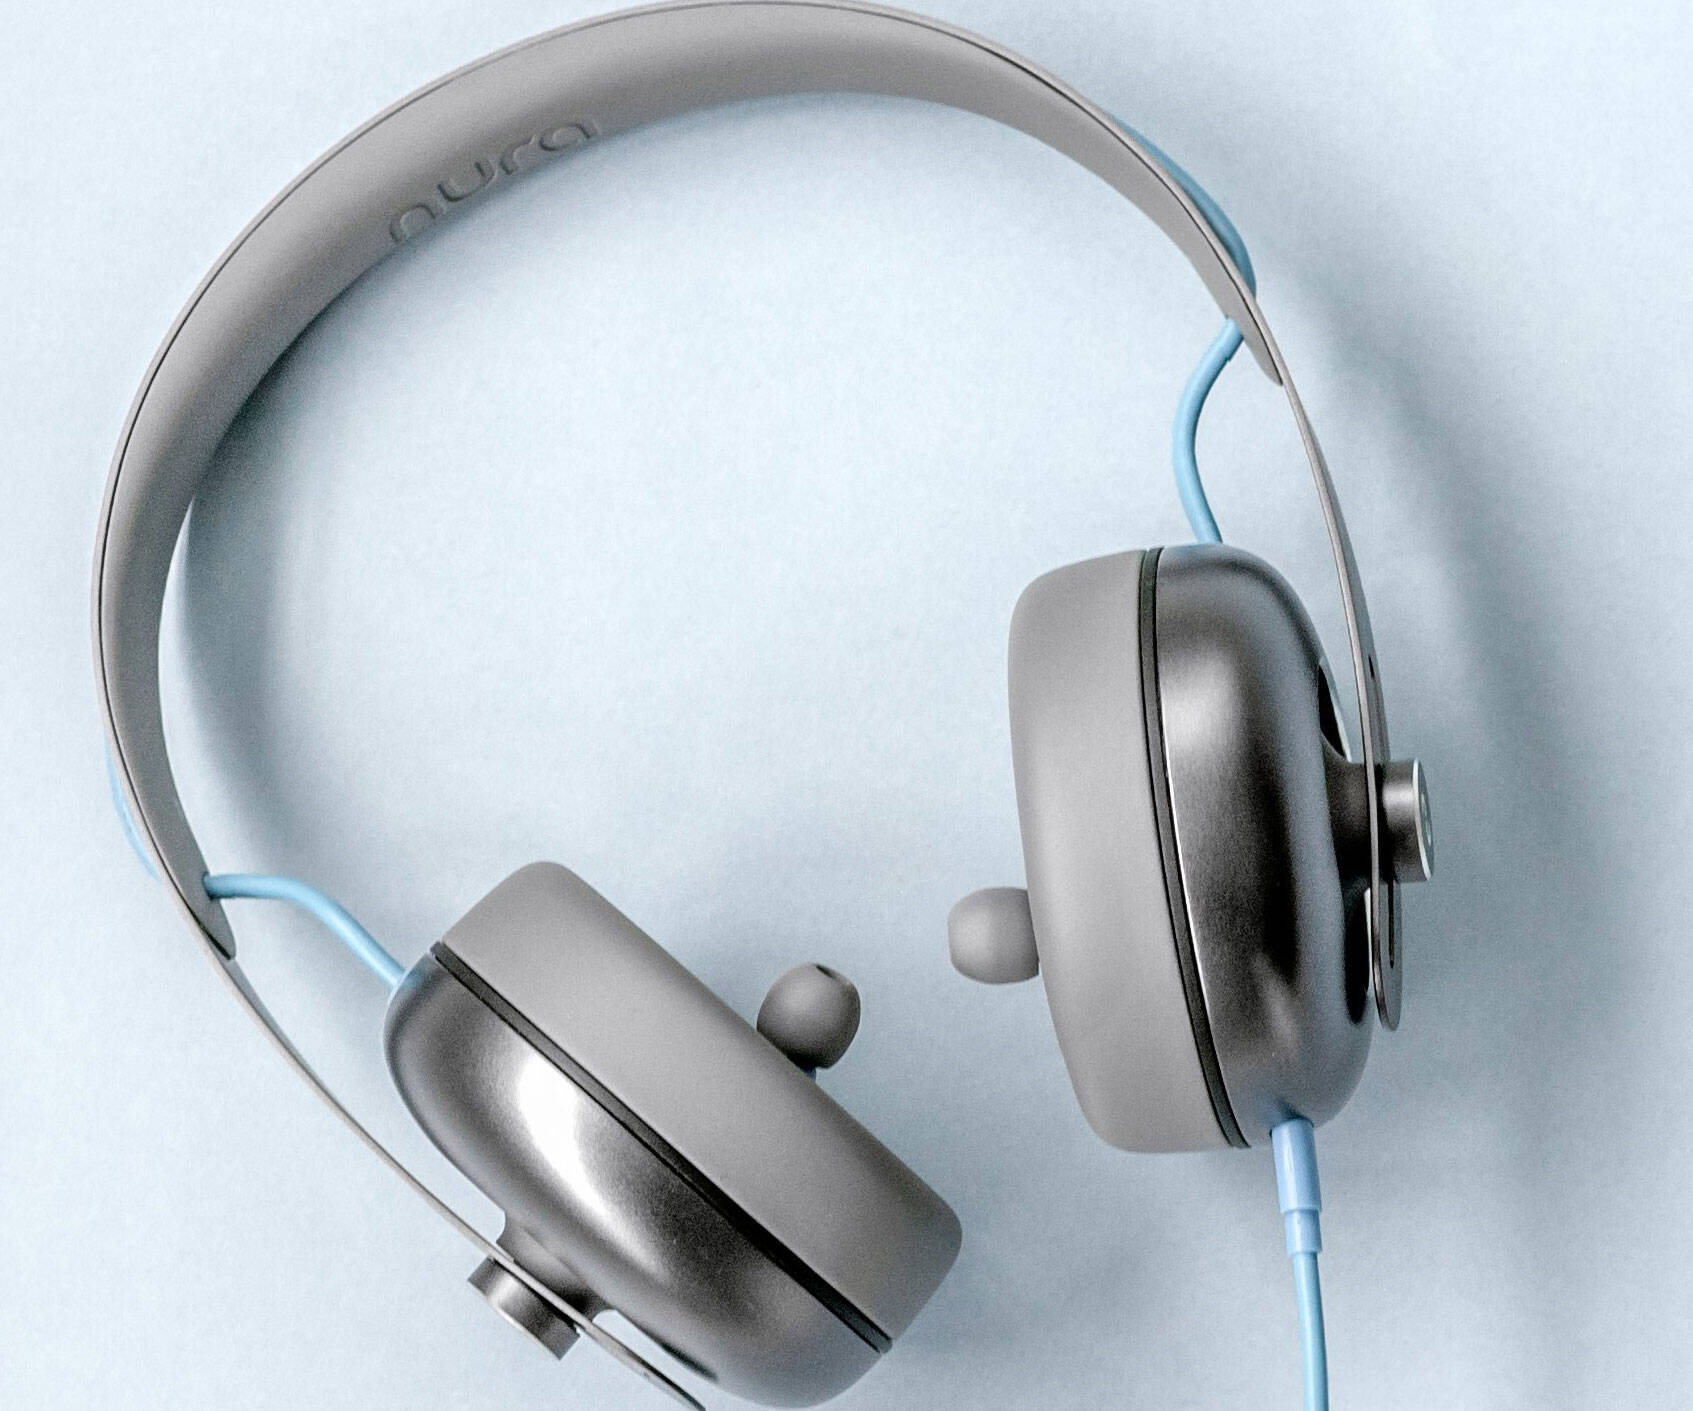 In-Ear & Over-Ear Headphones - //coolthings.us